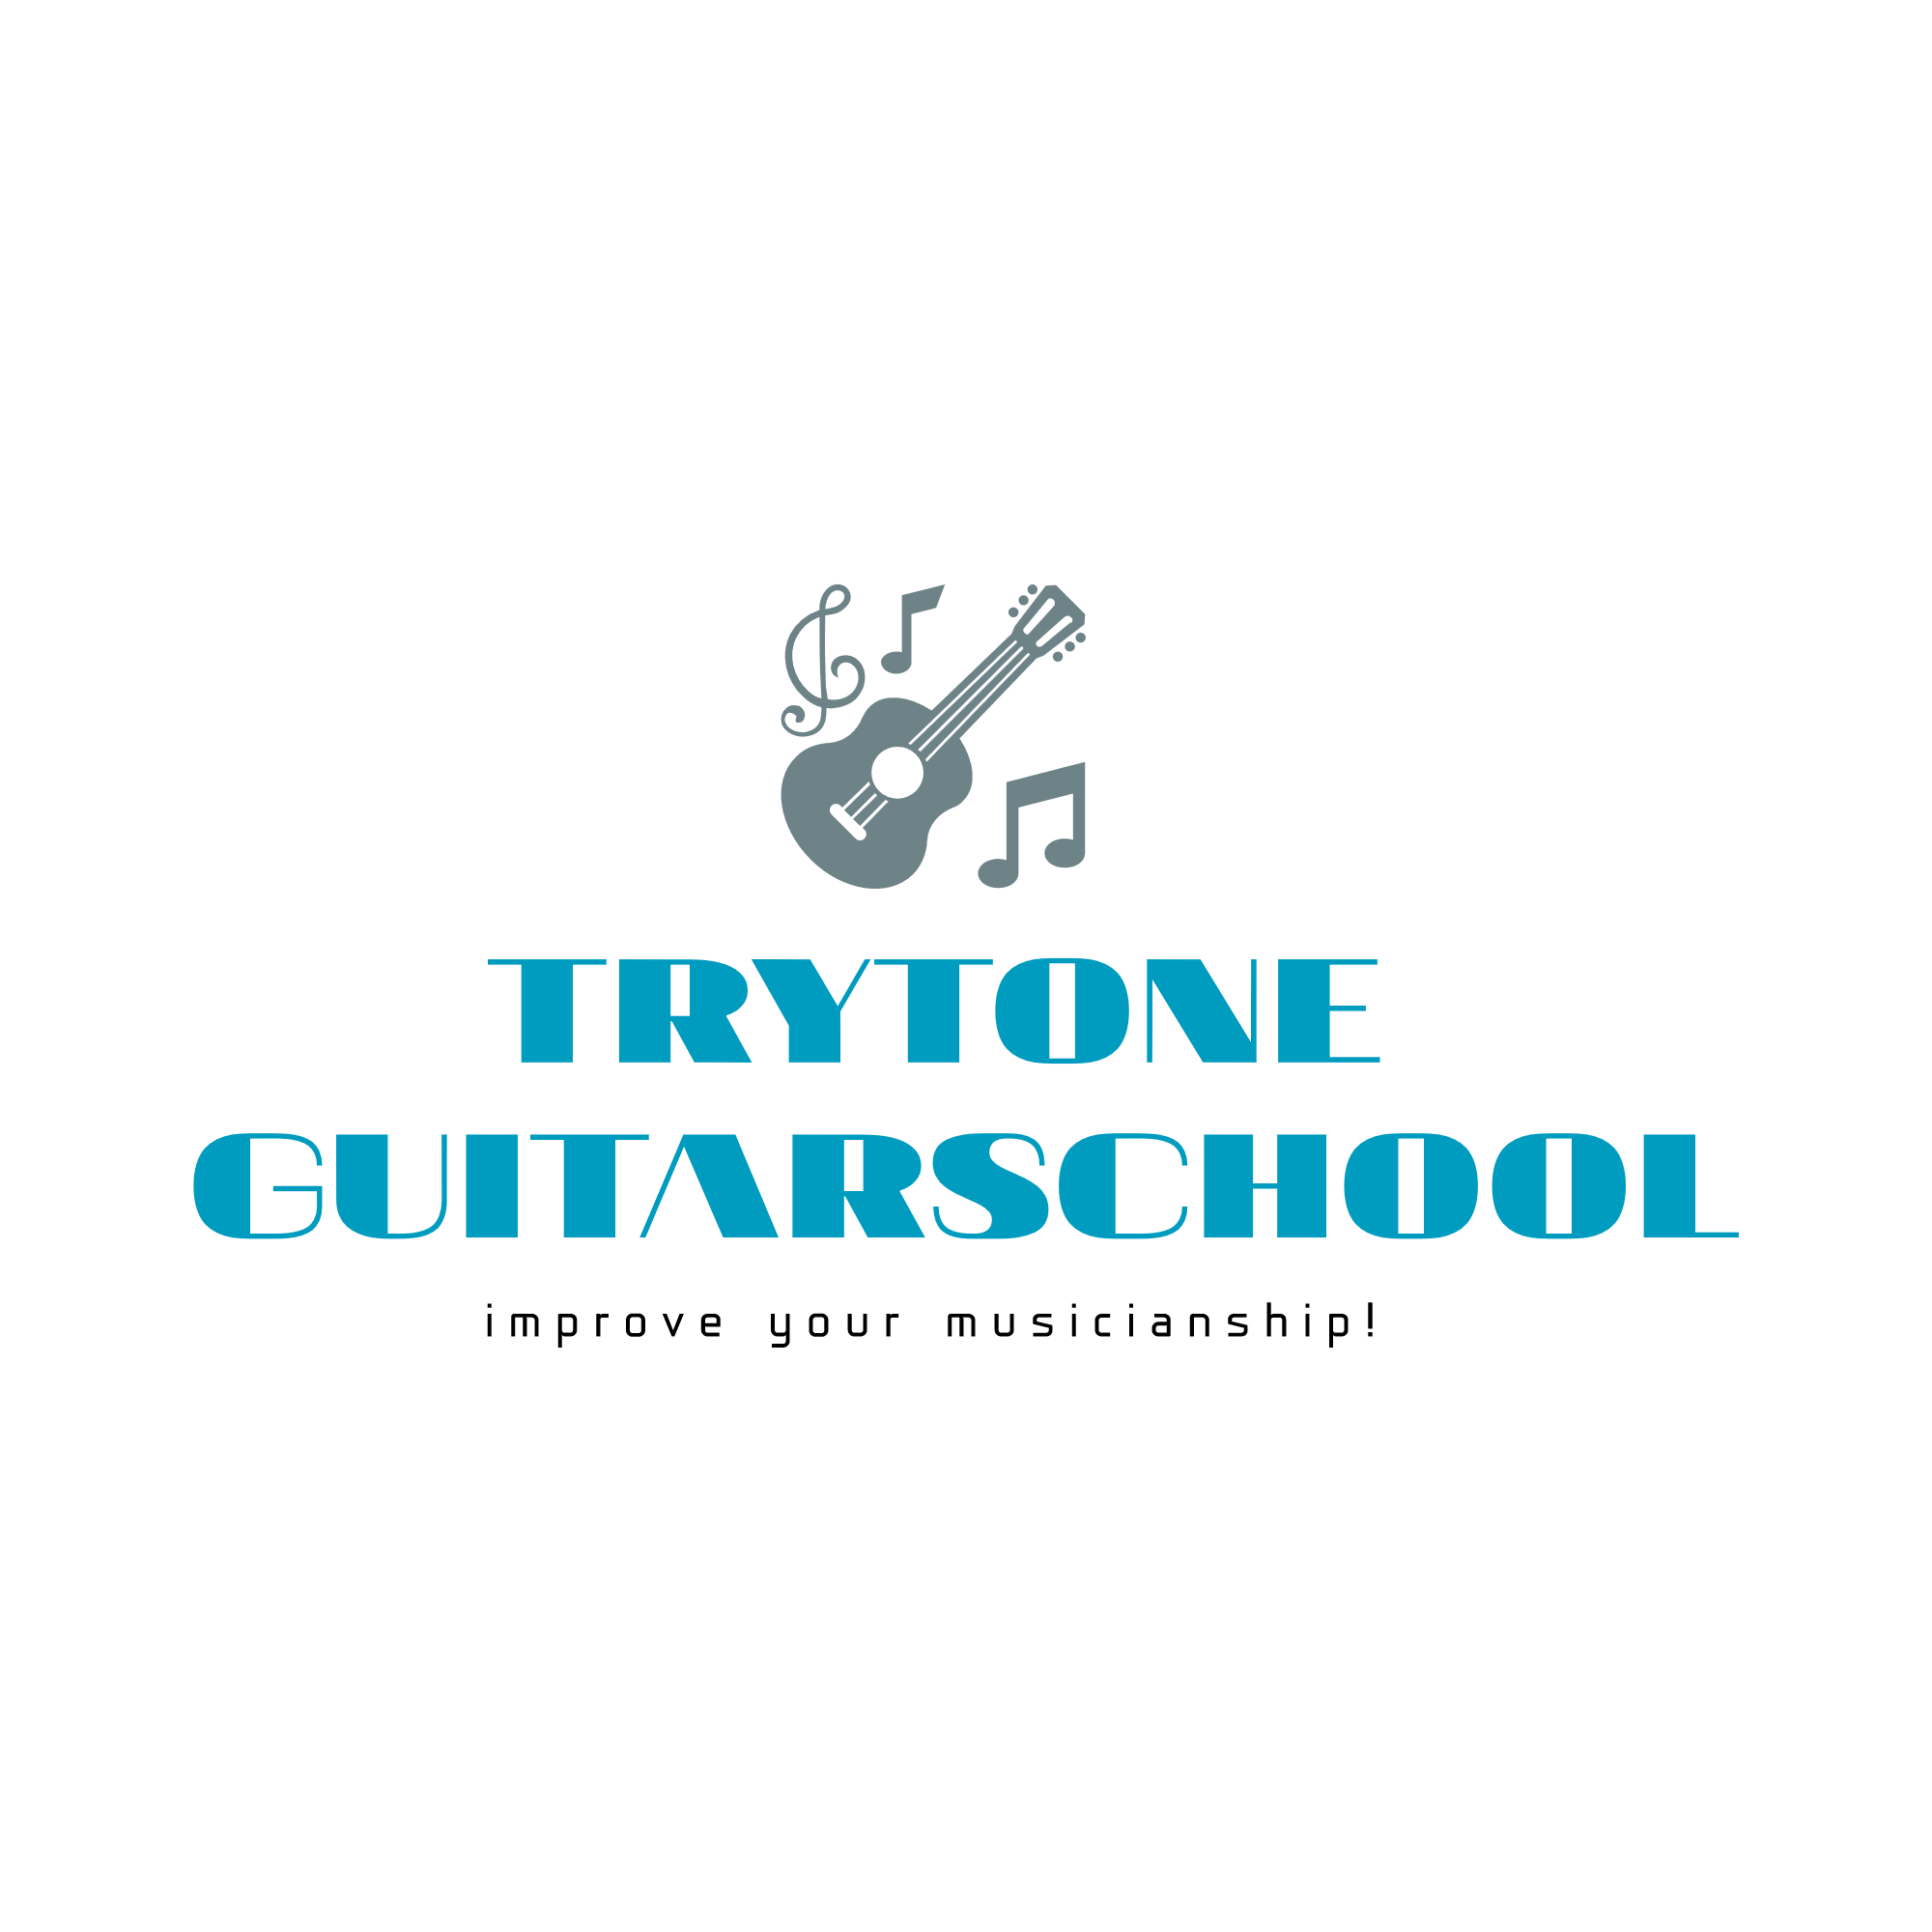 TRYTONEGUITARSCHOOL|福岡市早良区のギター教室|DTM|弾いてみた